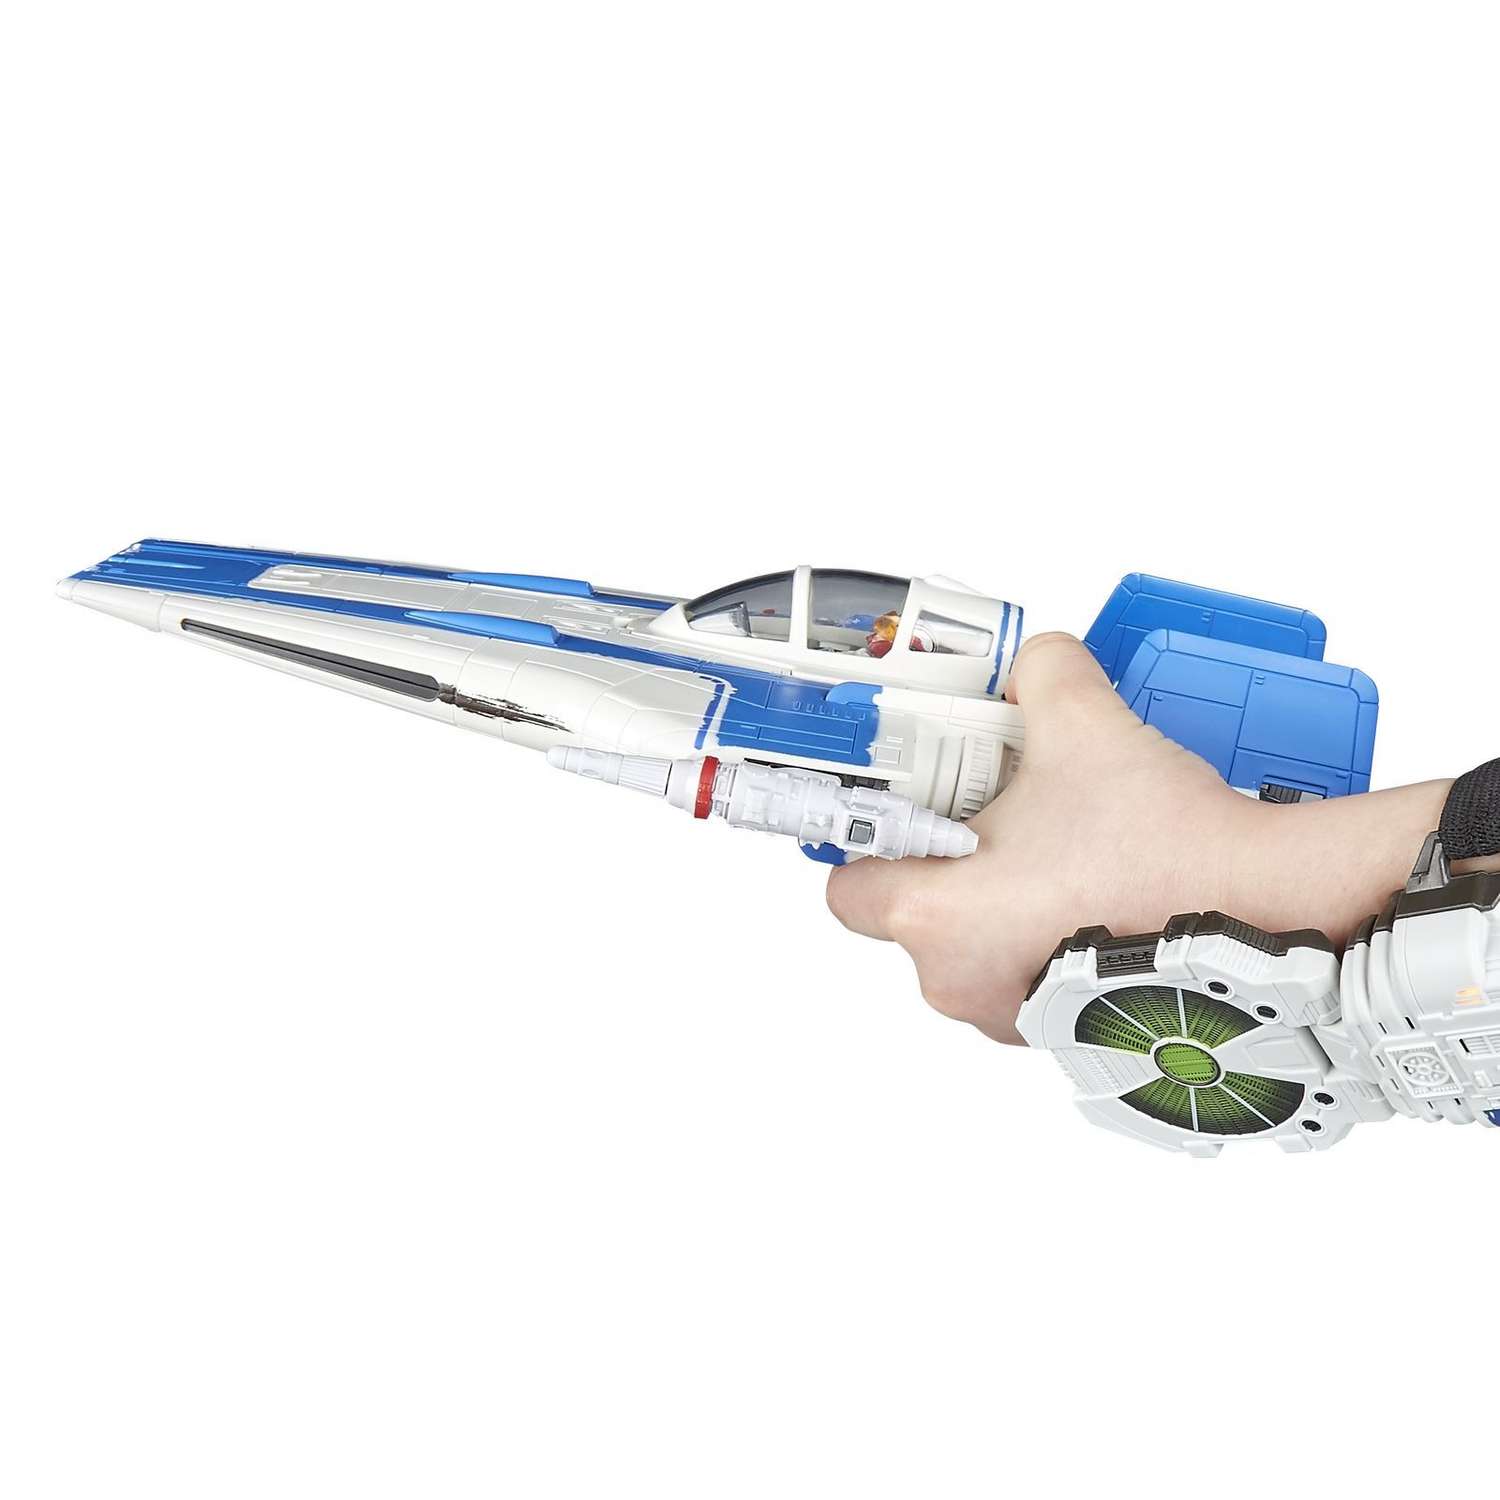 Игрушка Star Wars (SW) Транспорт Звездный истребитель a wing E1264EU4 E0326EU4 - фото 7